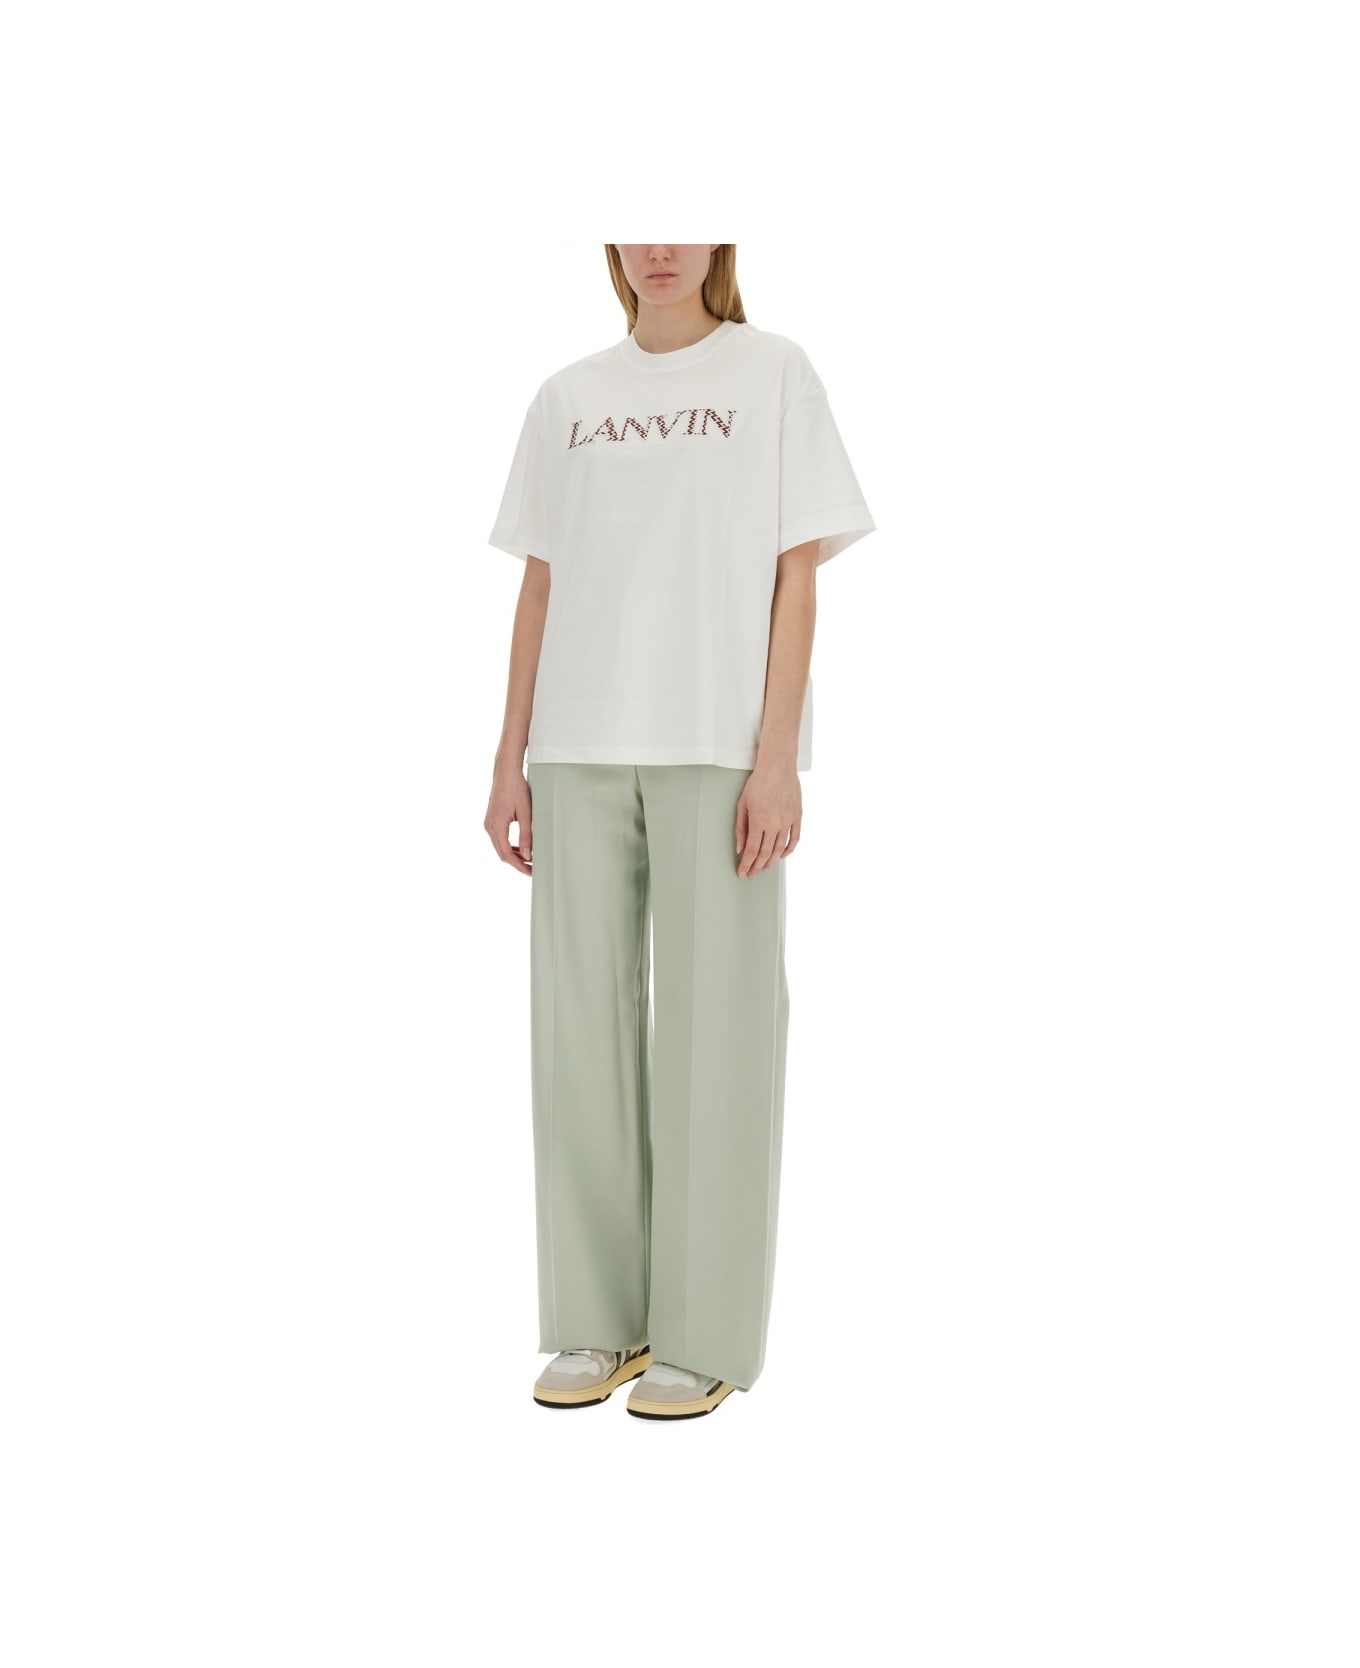 Lanvin T-shirt With Logo - WHITE